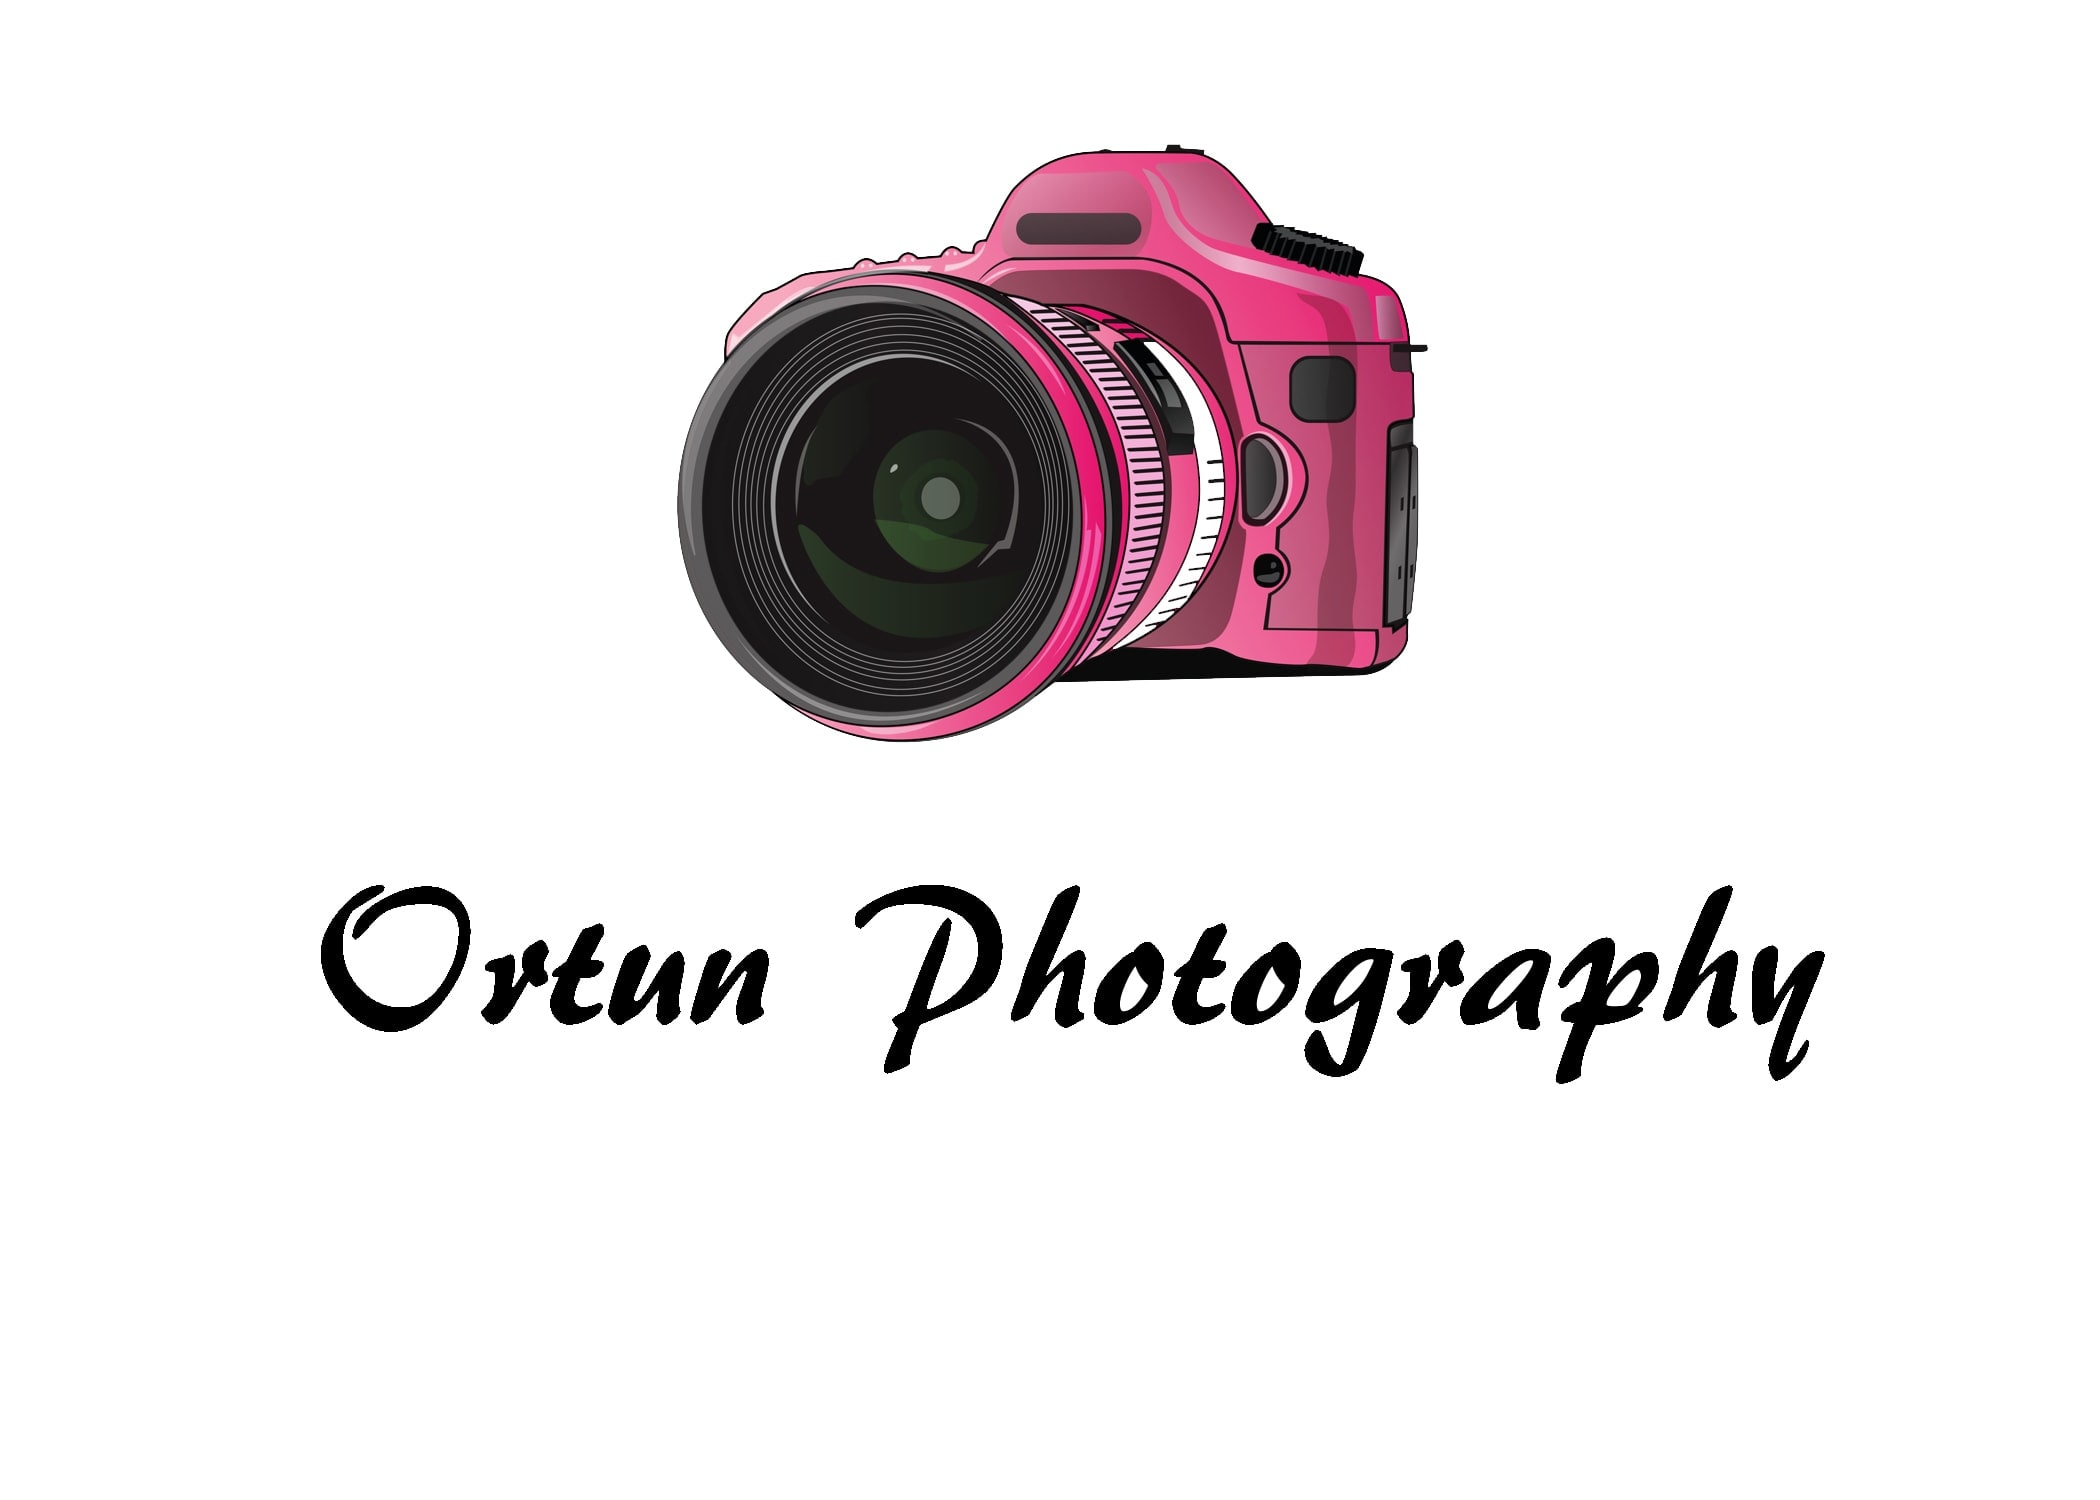 Ortun Photography